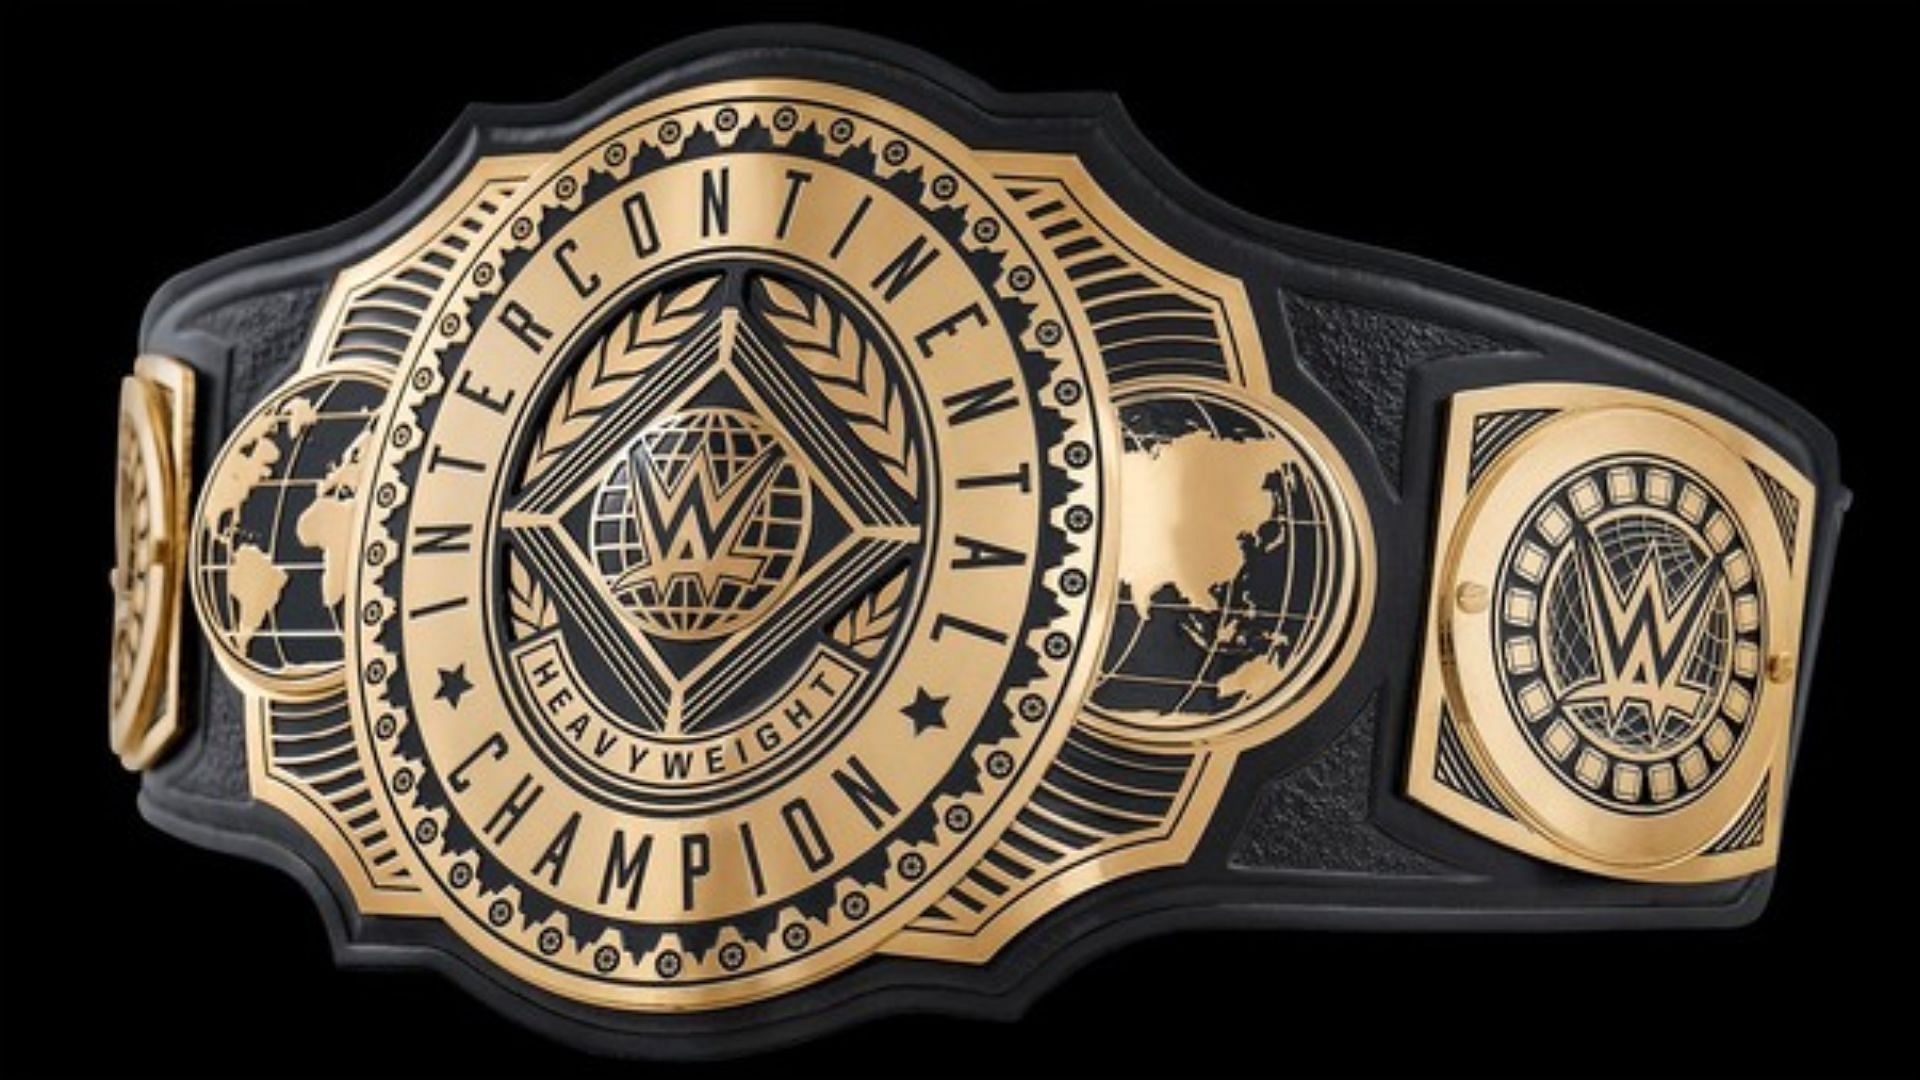 The prestigious WWE Intercontinental Championship